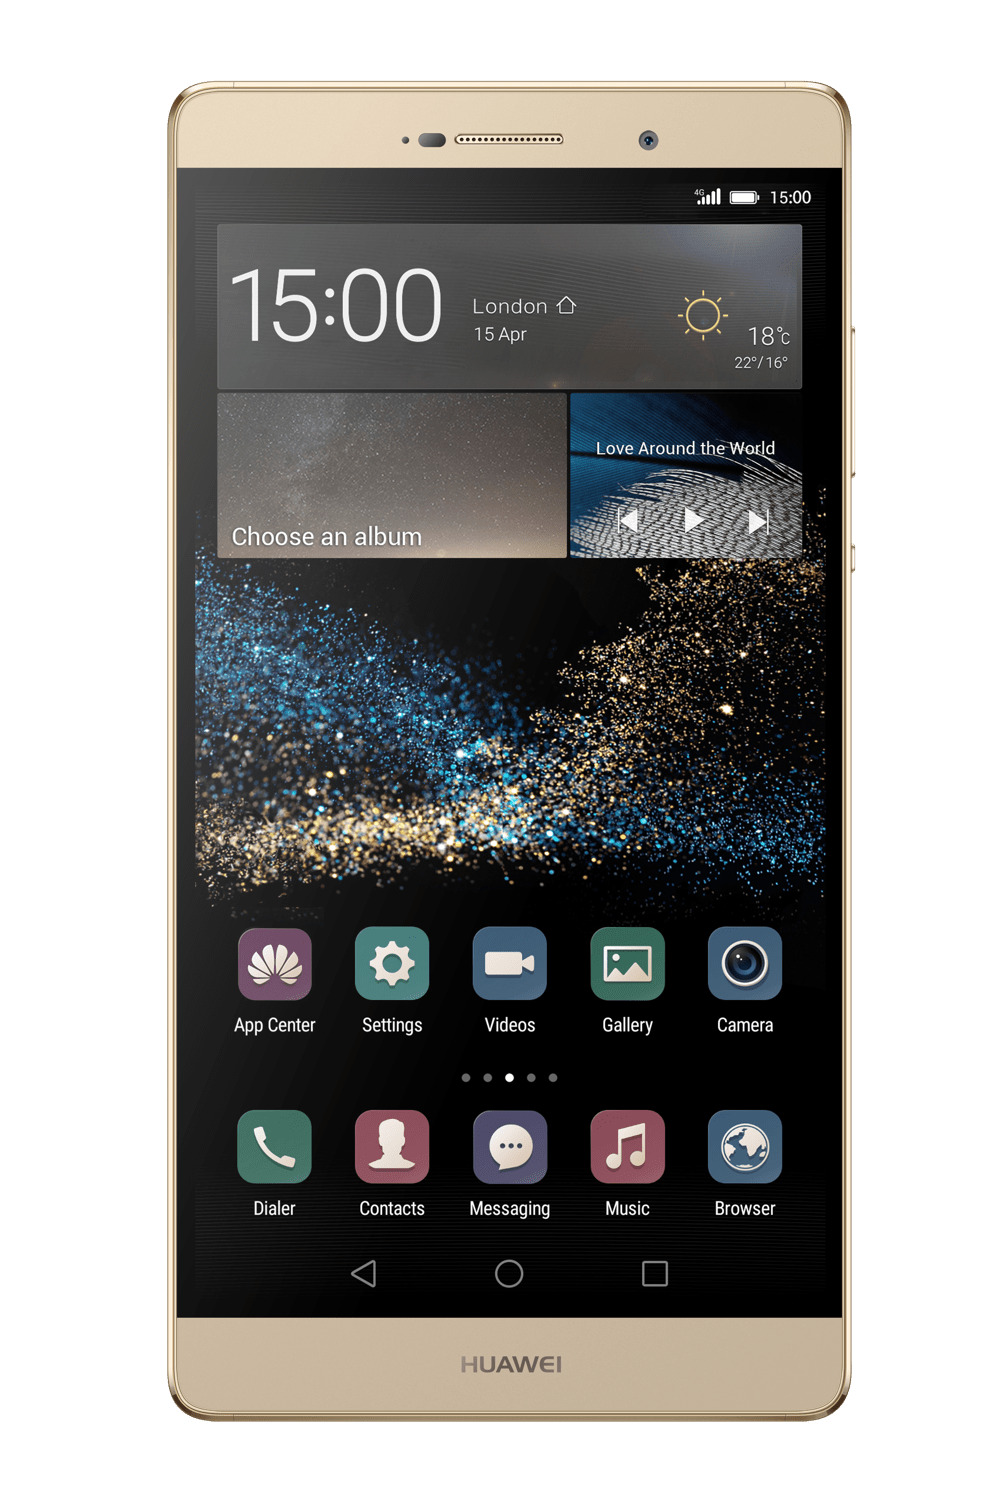 Huawei P8 Smartphone icons